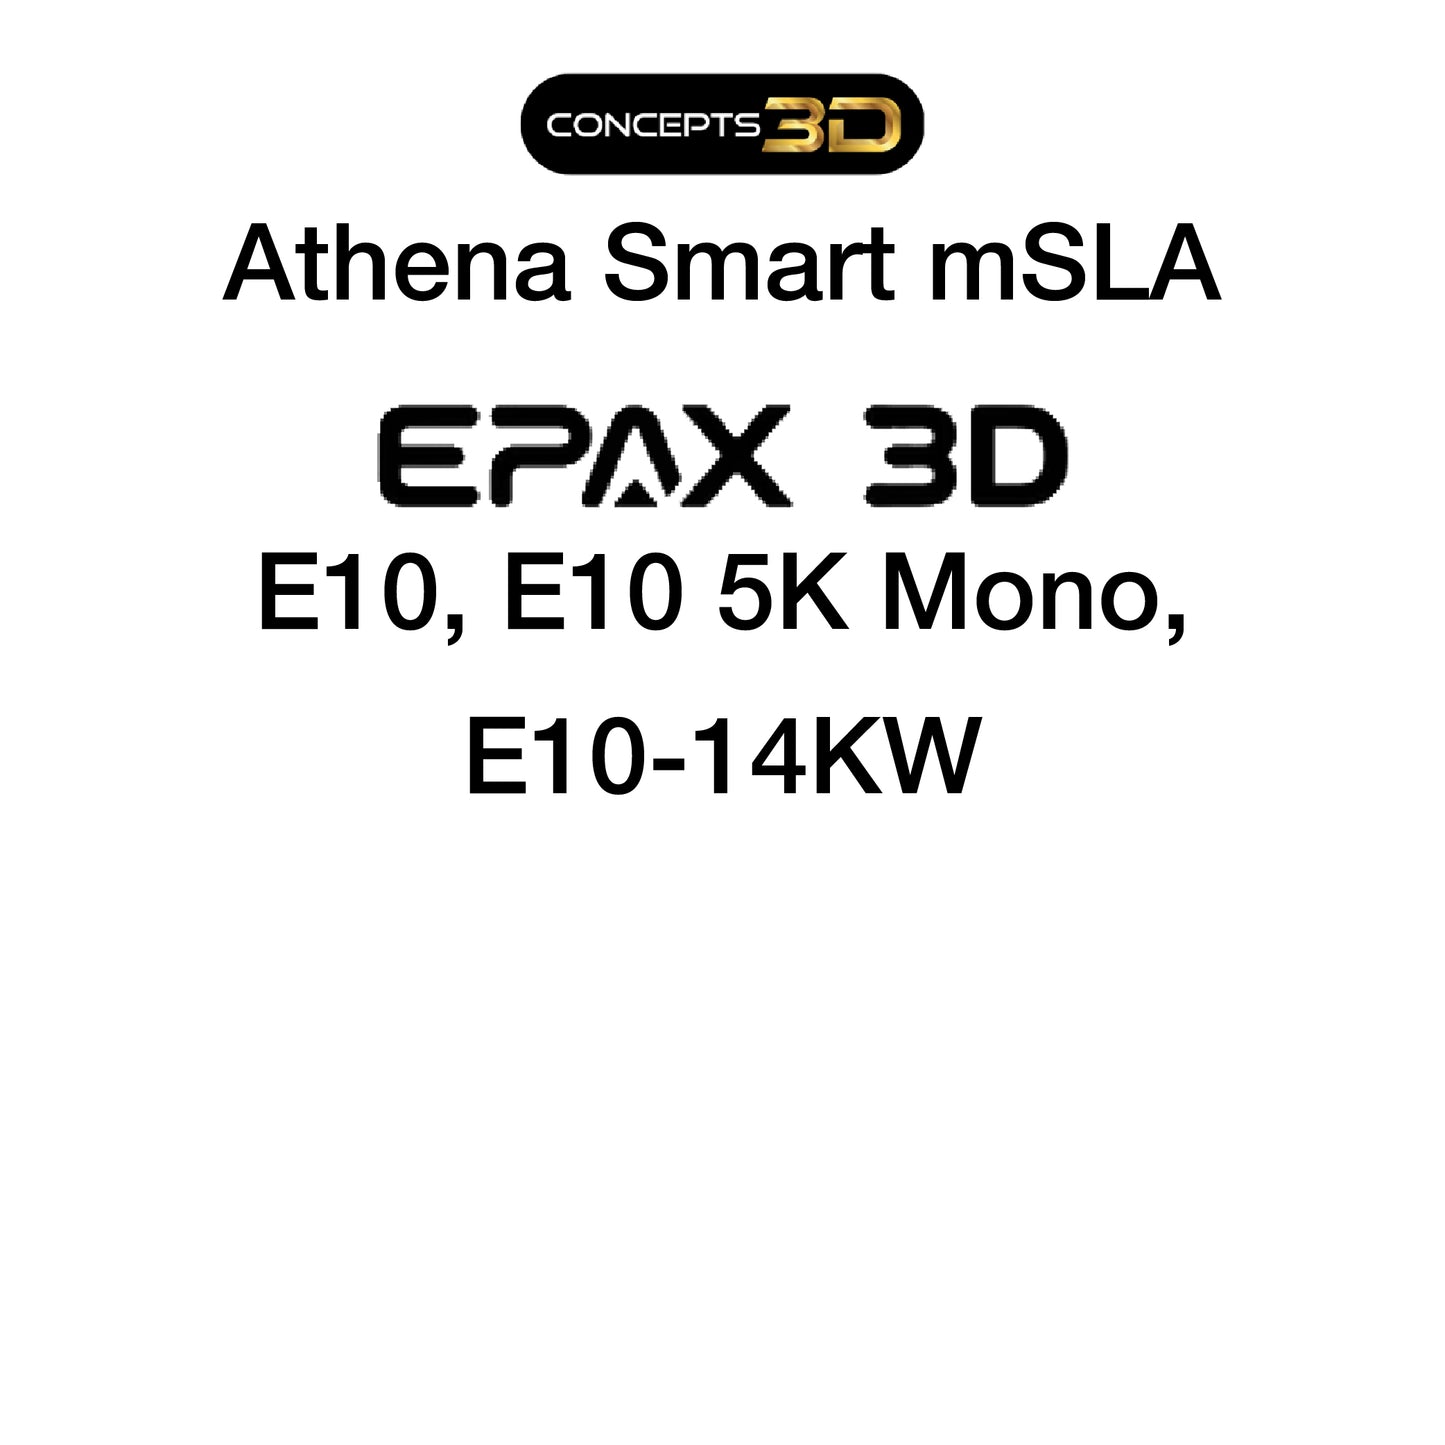 Kit - EPAX 3D E10 Series - 232 x 141